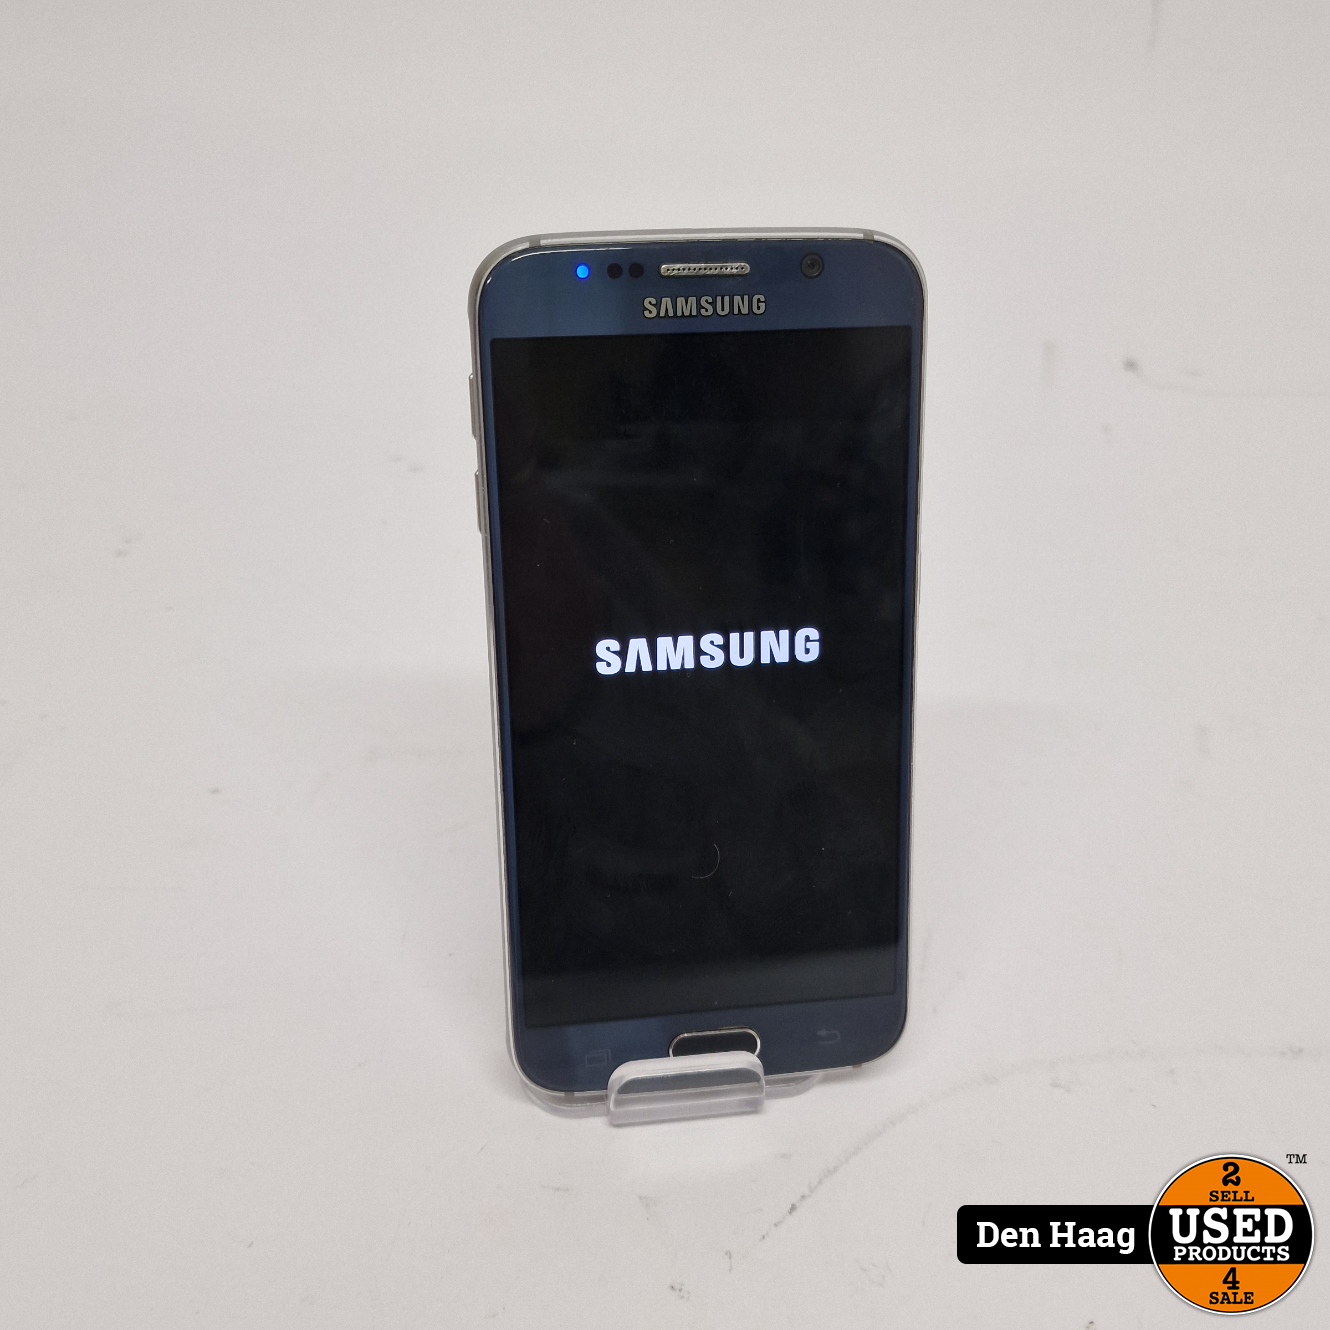 kromme Wiens Bijdrage Samsung Galaxy S6 32GB Zwart | Nette staat - Used Products Den Haag